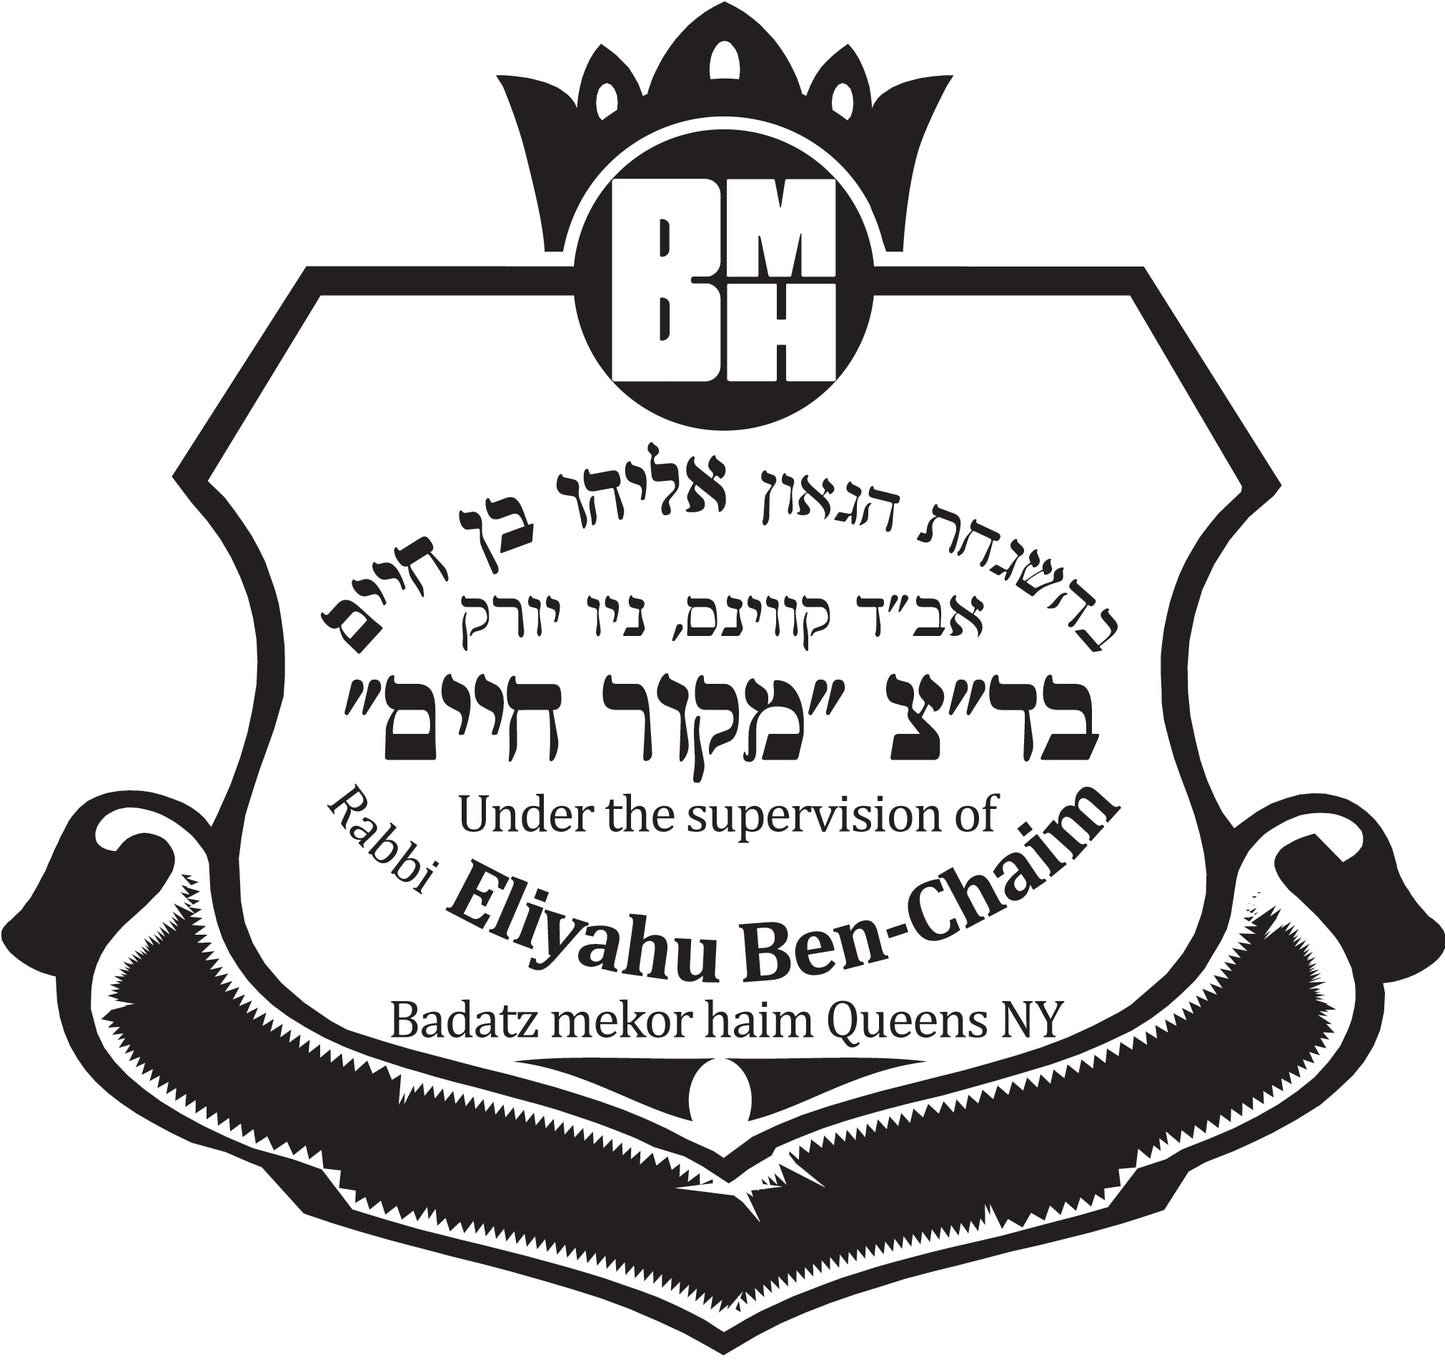 Premium Kosher Grass-Fed Beef - Filet Mignon (Hind Quarter) | L'Chaim Meats